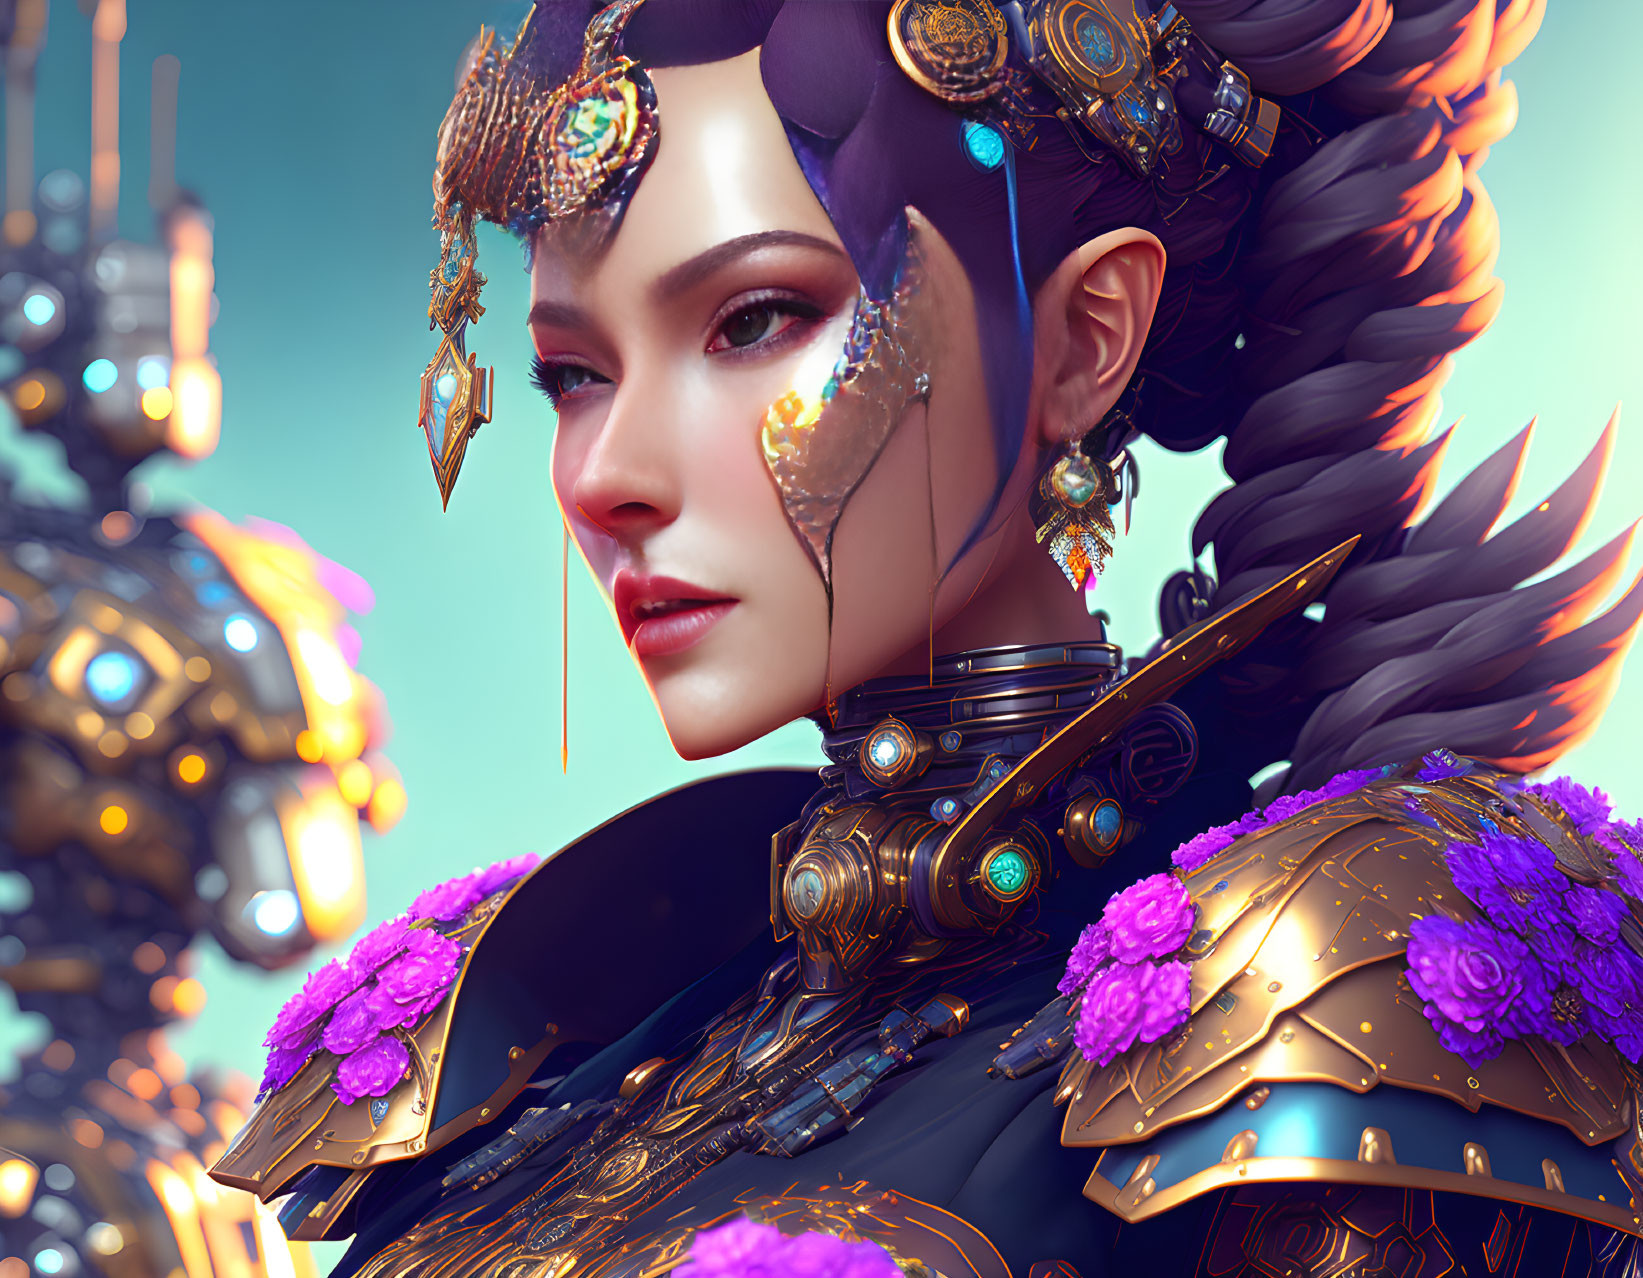 Digital art portrait: Woman in golden armor with plum flowers